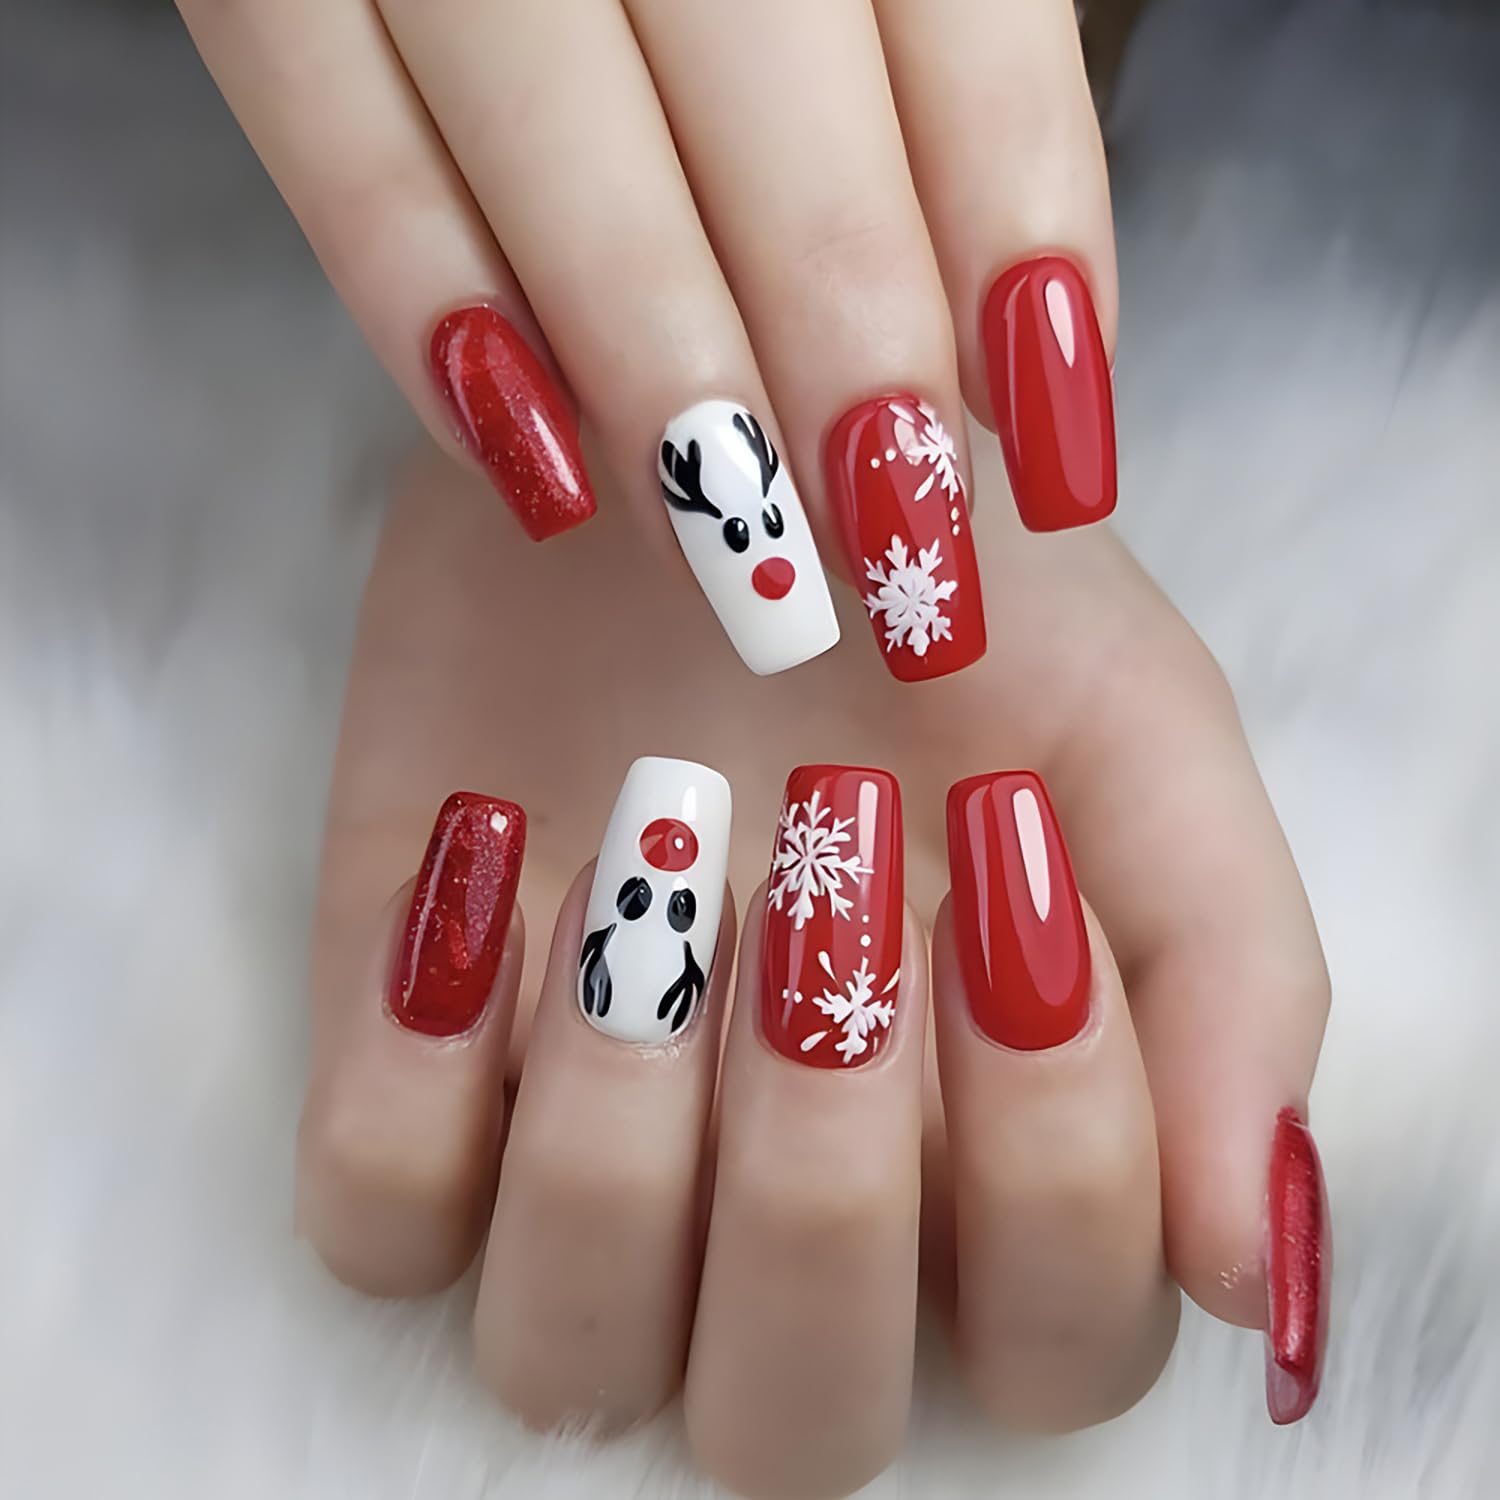 33 Red And White Christmas Nails Bringing Holiday Cheer | Five Senses ...